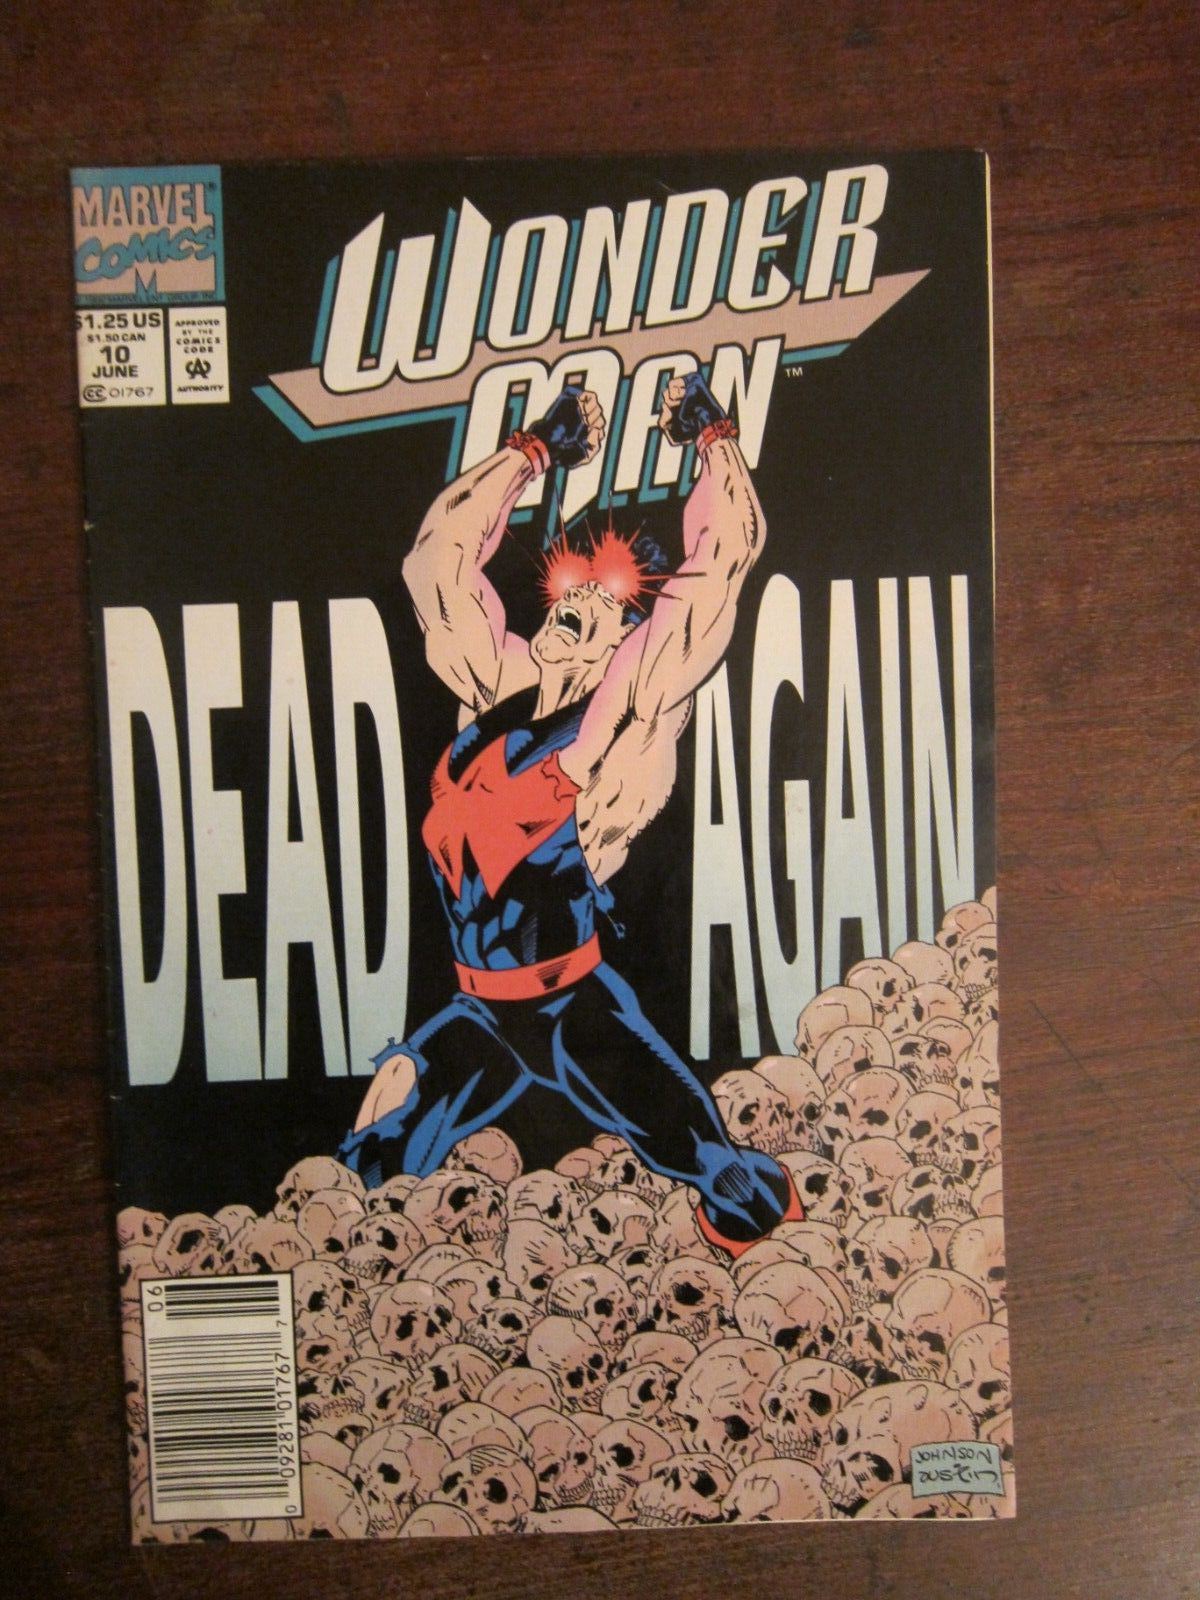 Wonderman #10 - 1992 - Jeff Johnson art - MCU series?